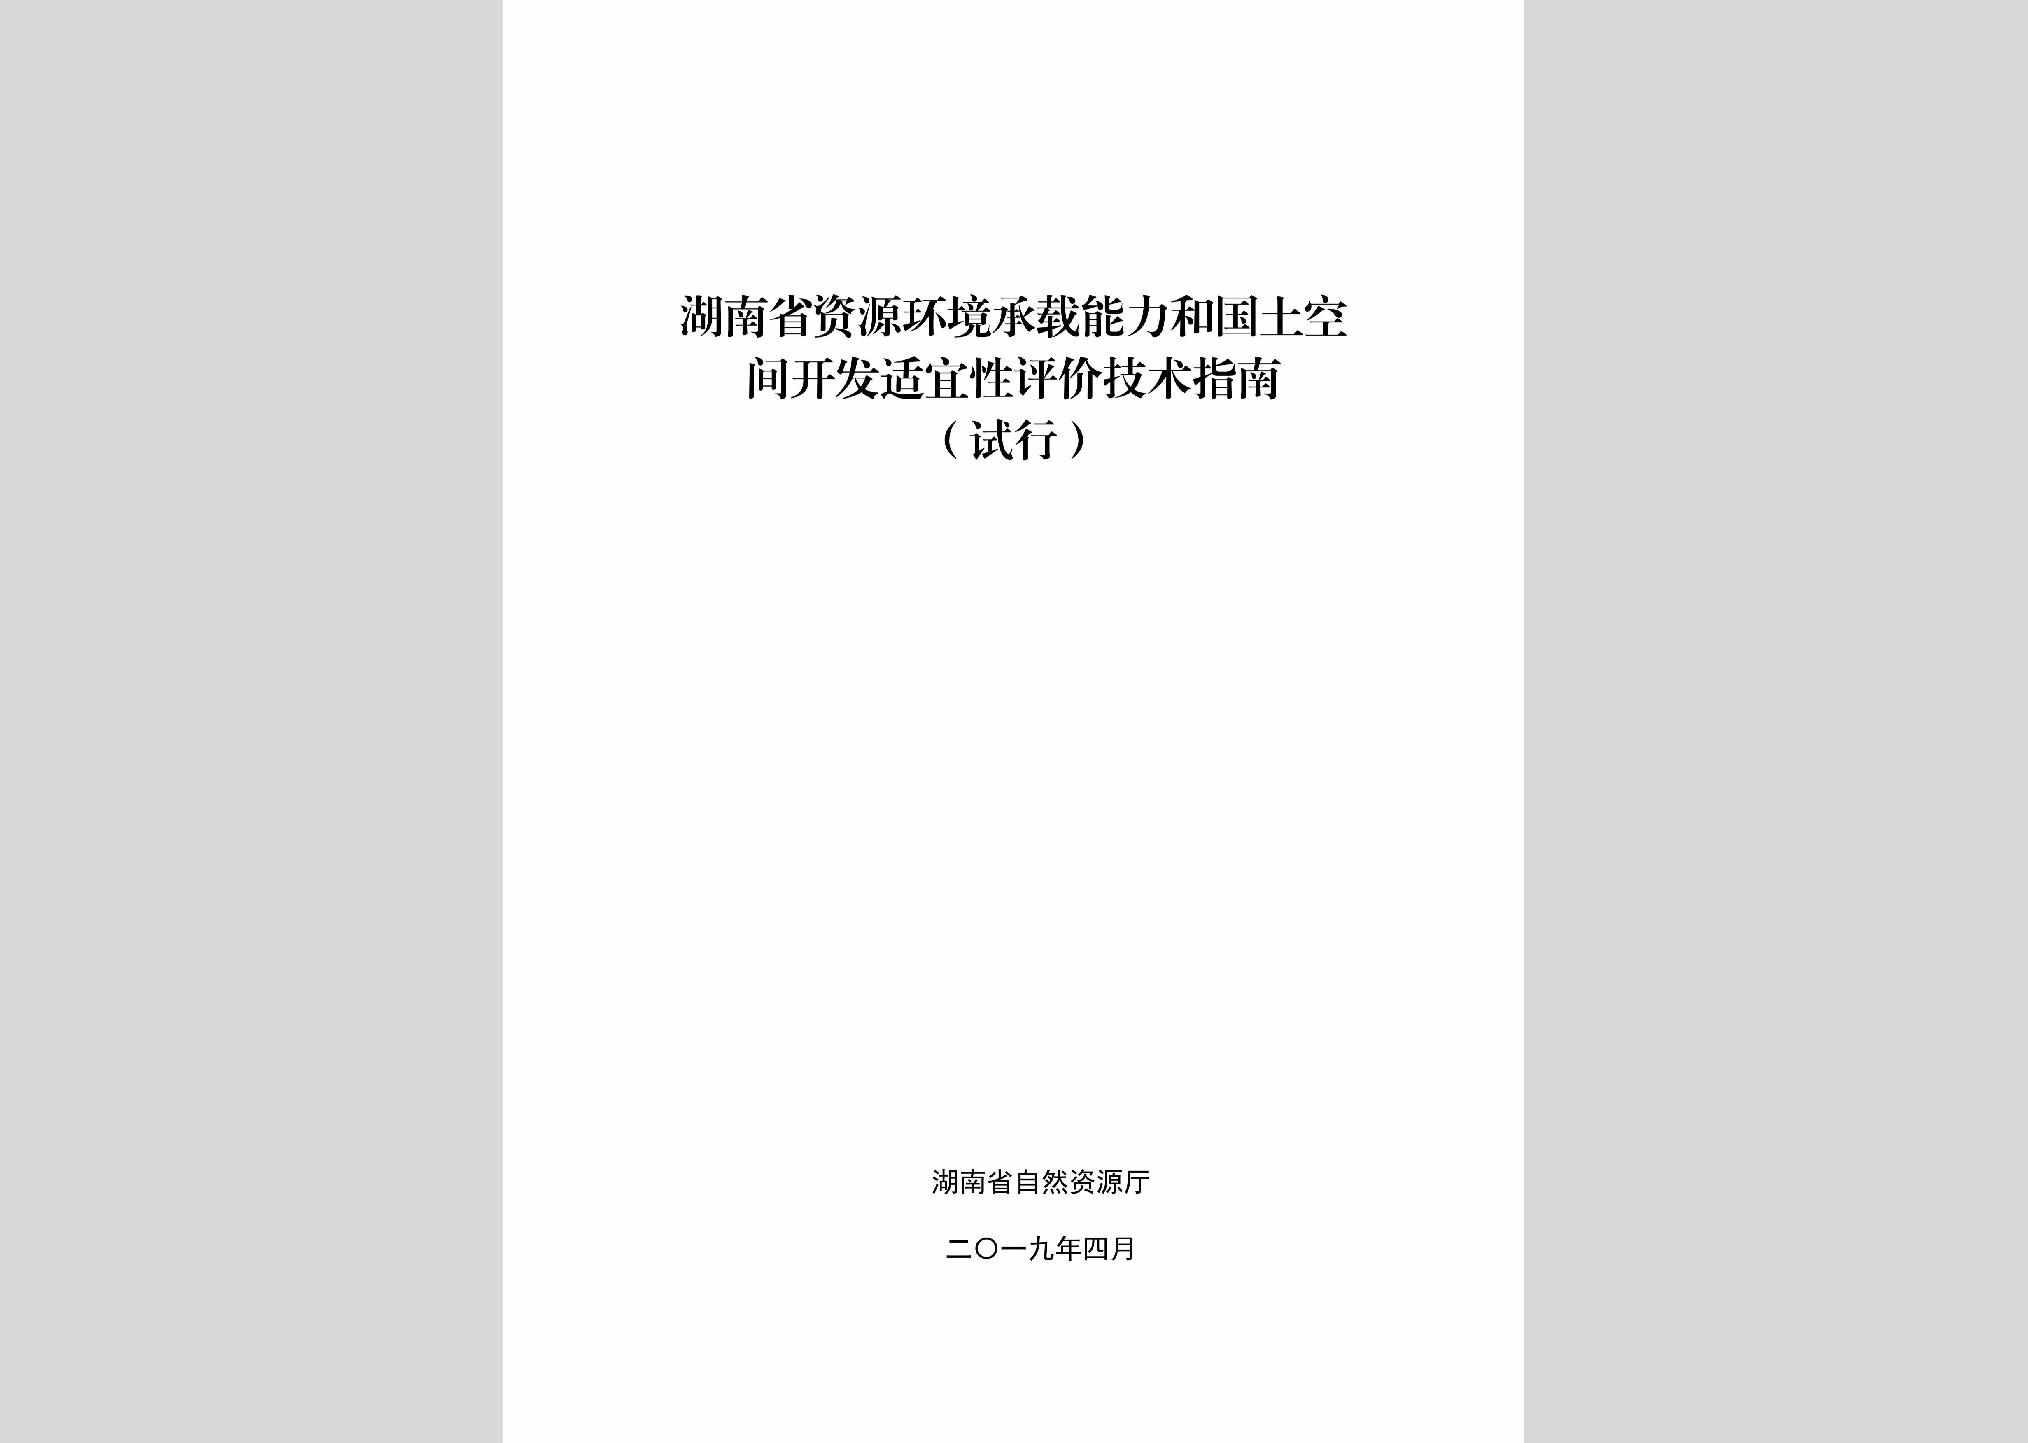 ZYHJCZNL：湖南省资源环境承载能力和国土空间开发适宜性评价技术指南（试行）